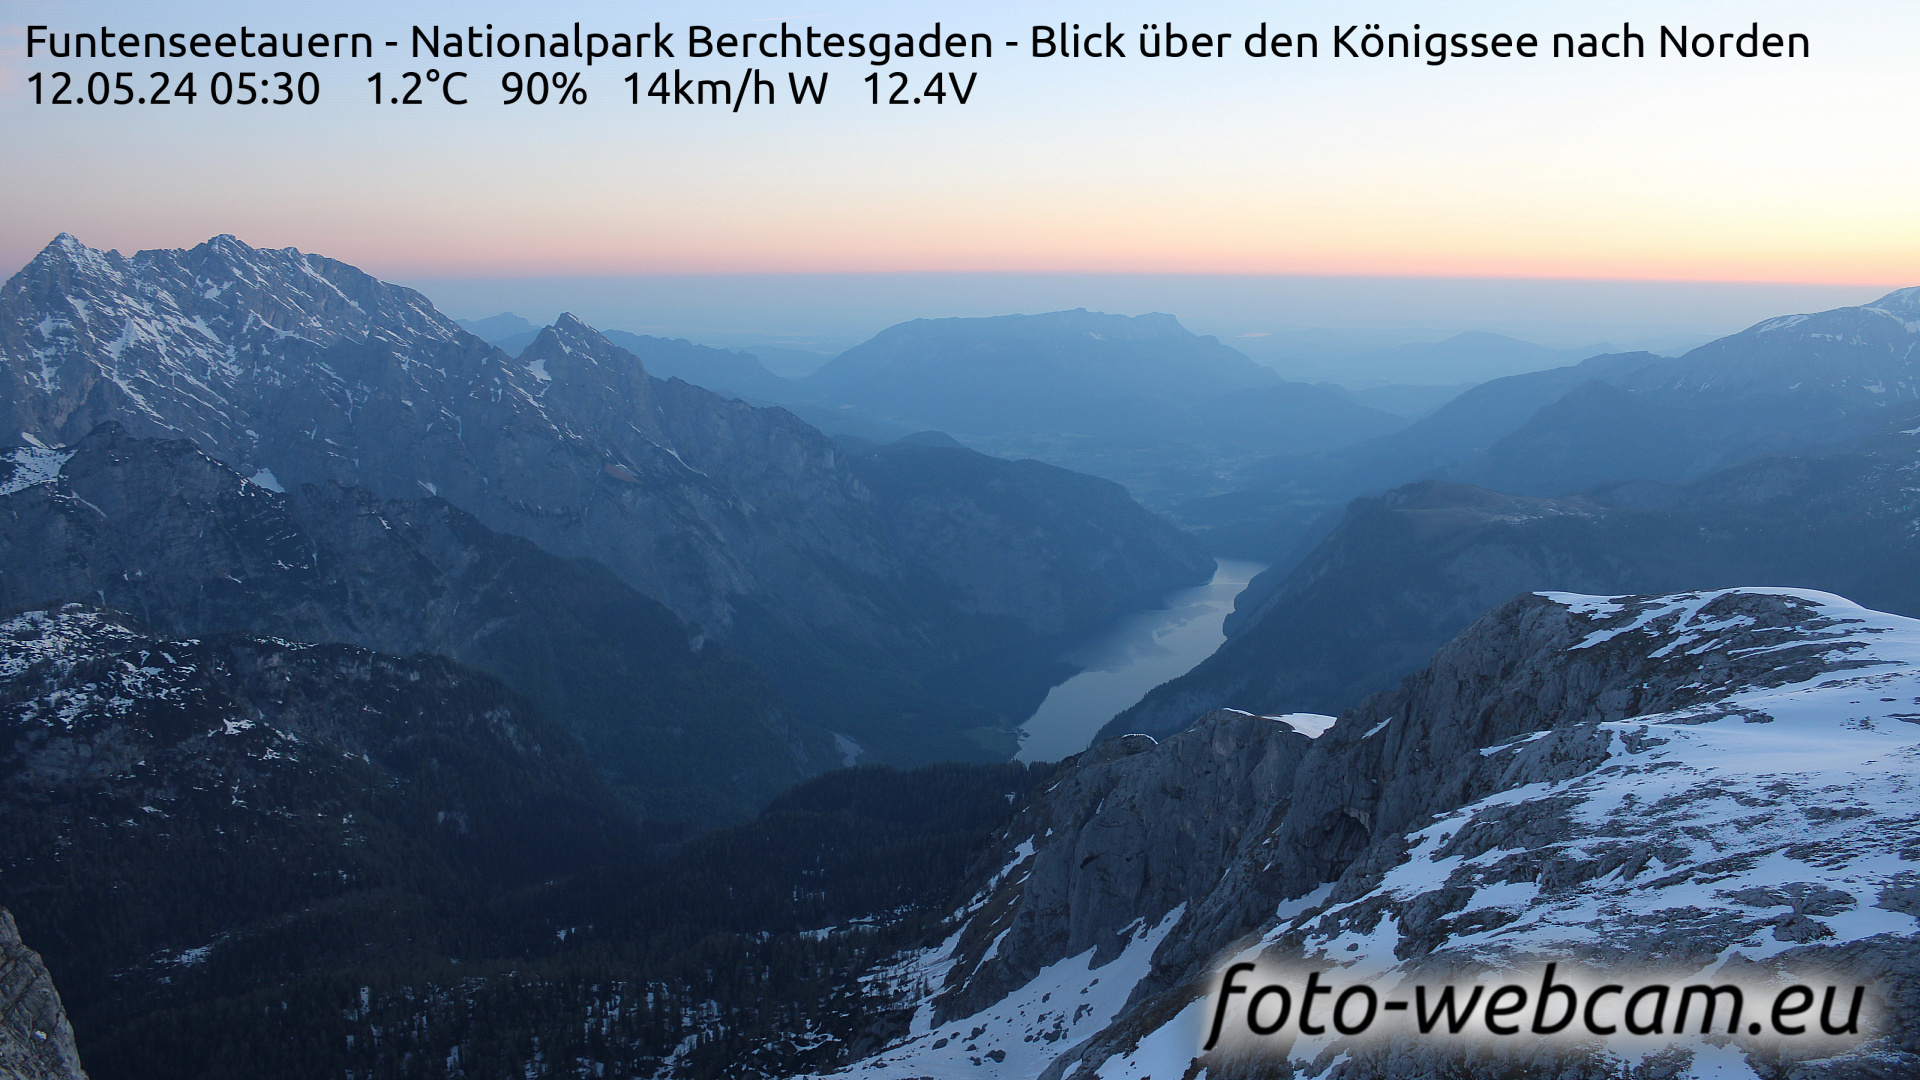 Berchtesgaden Me. 05:48